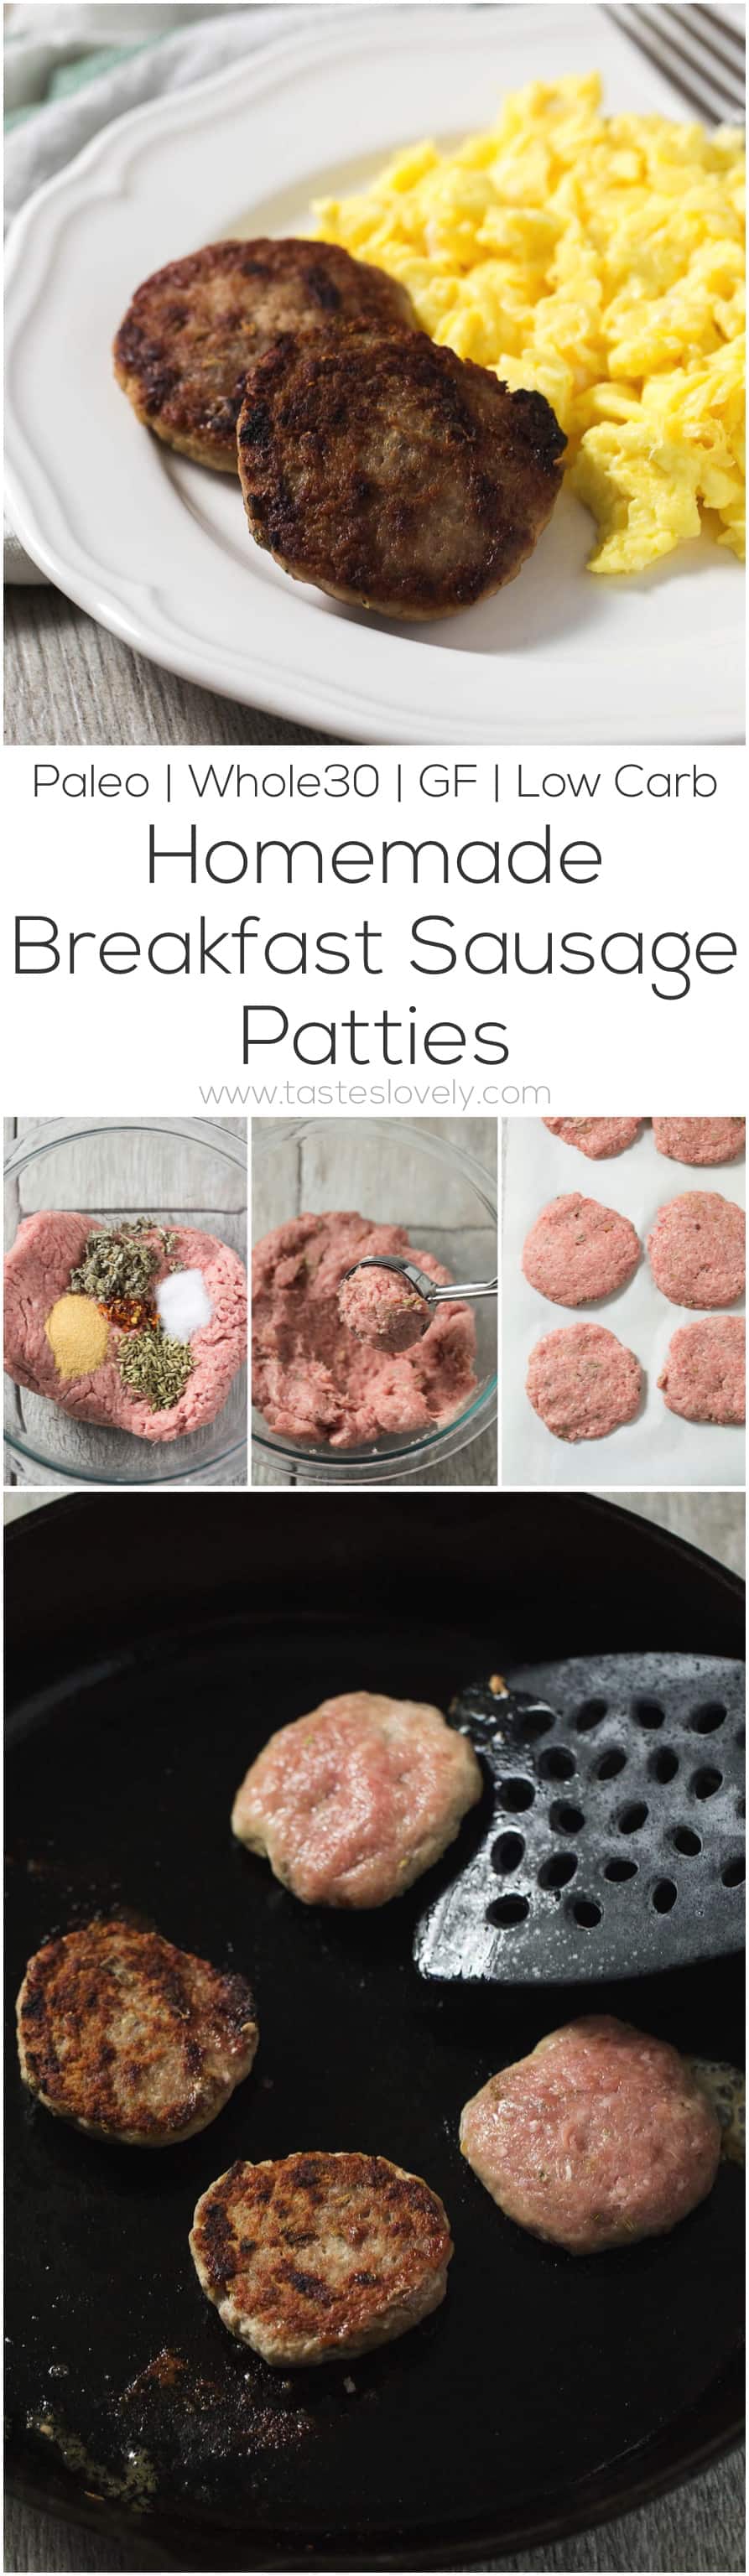 Homemade Paleo Breakfast Sausage Patties